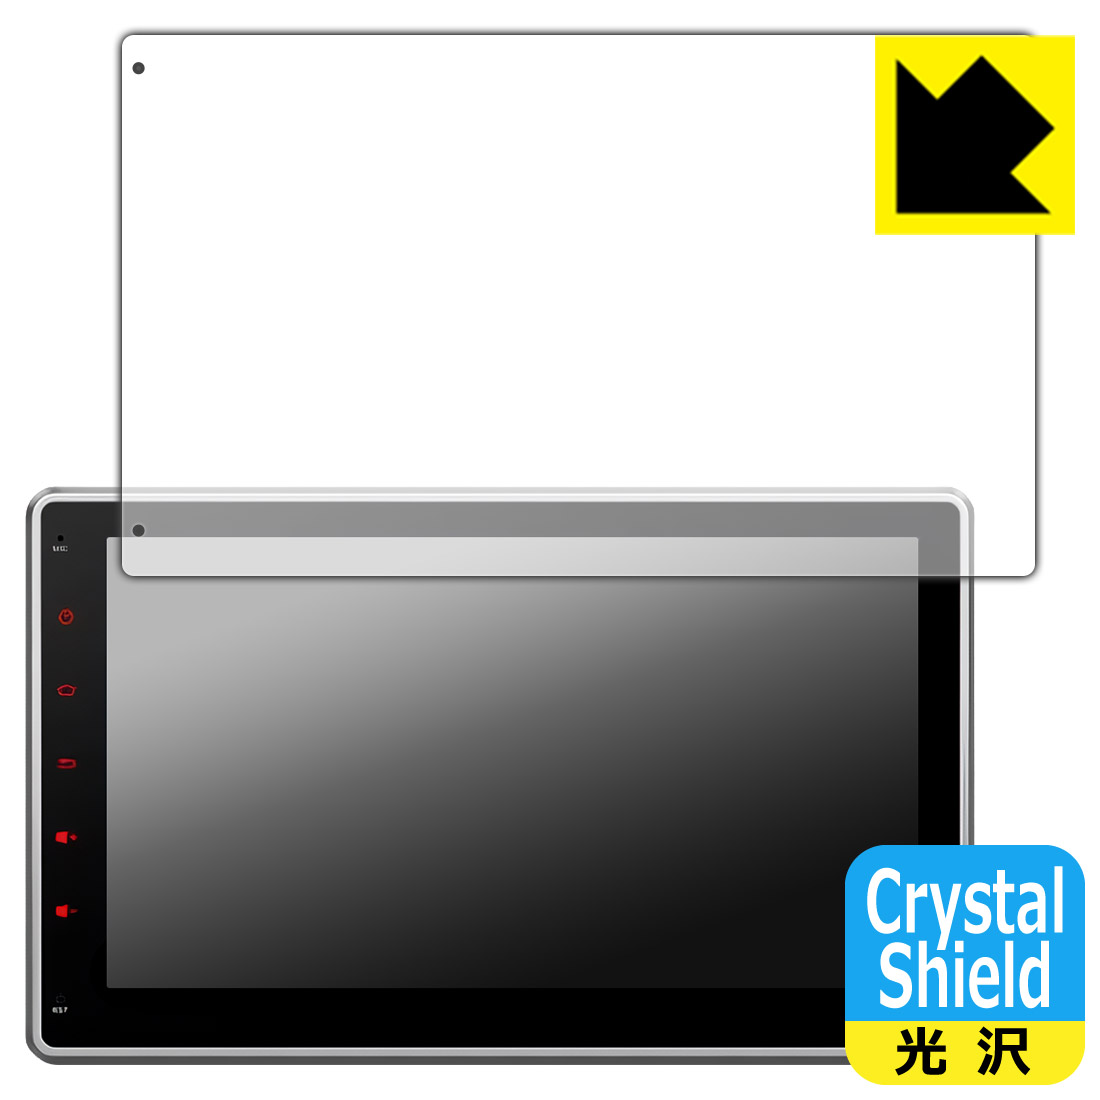 Crystal Shield【光沢】保護フィルム XTRONS カーナビ 10.1インチ TIX125L (3枚セット) 日本製 自社製造直販